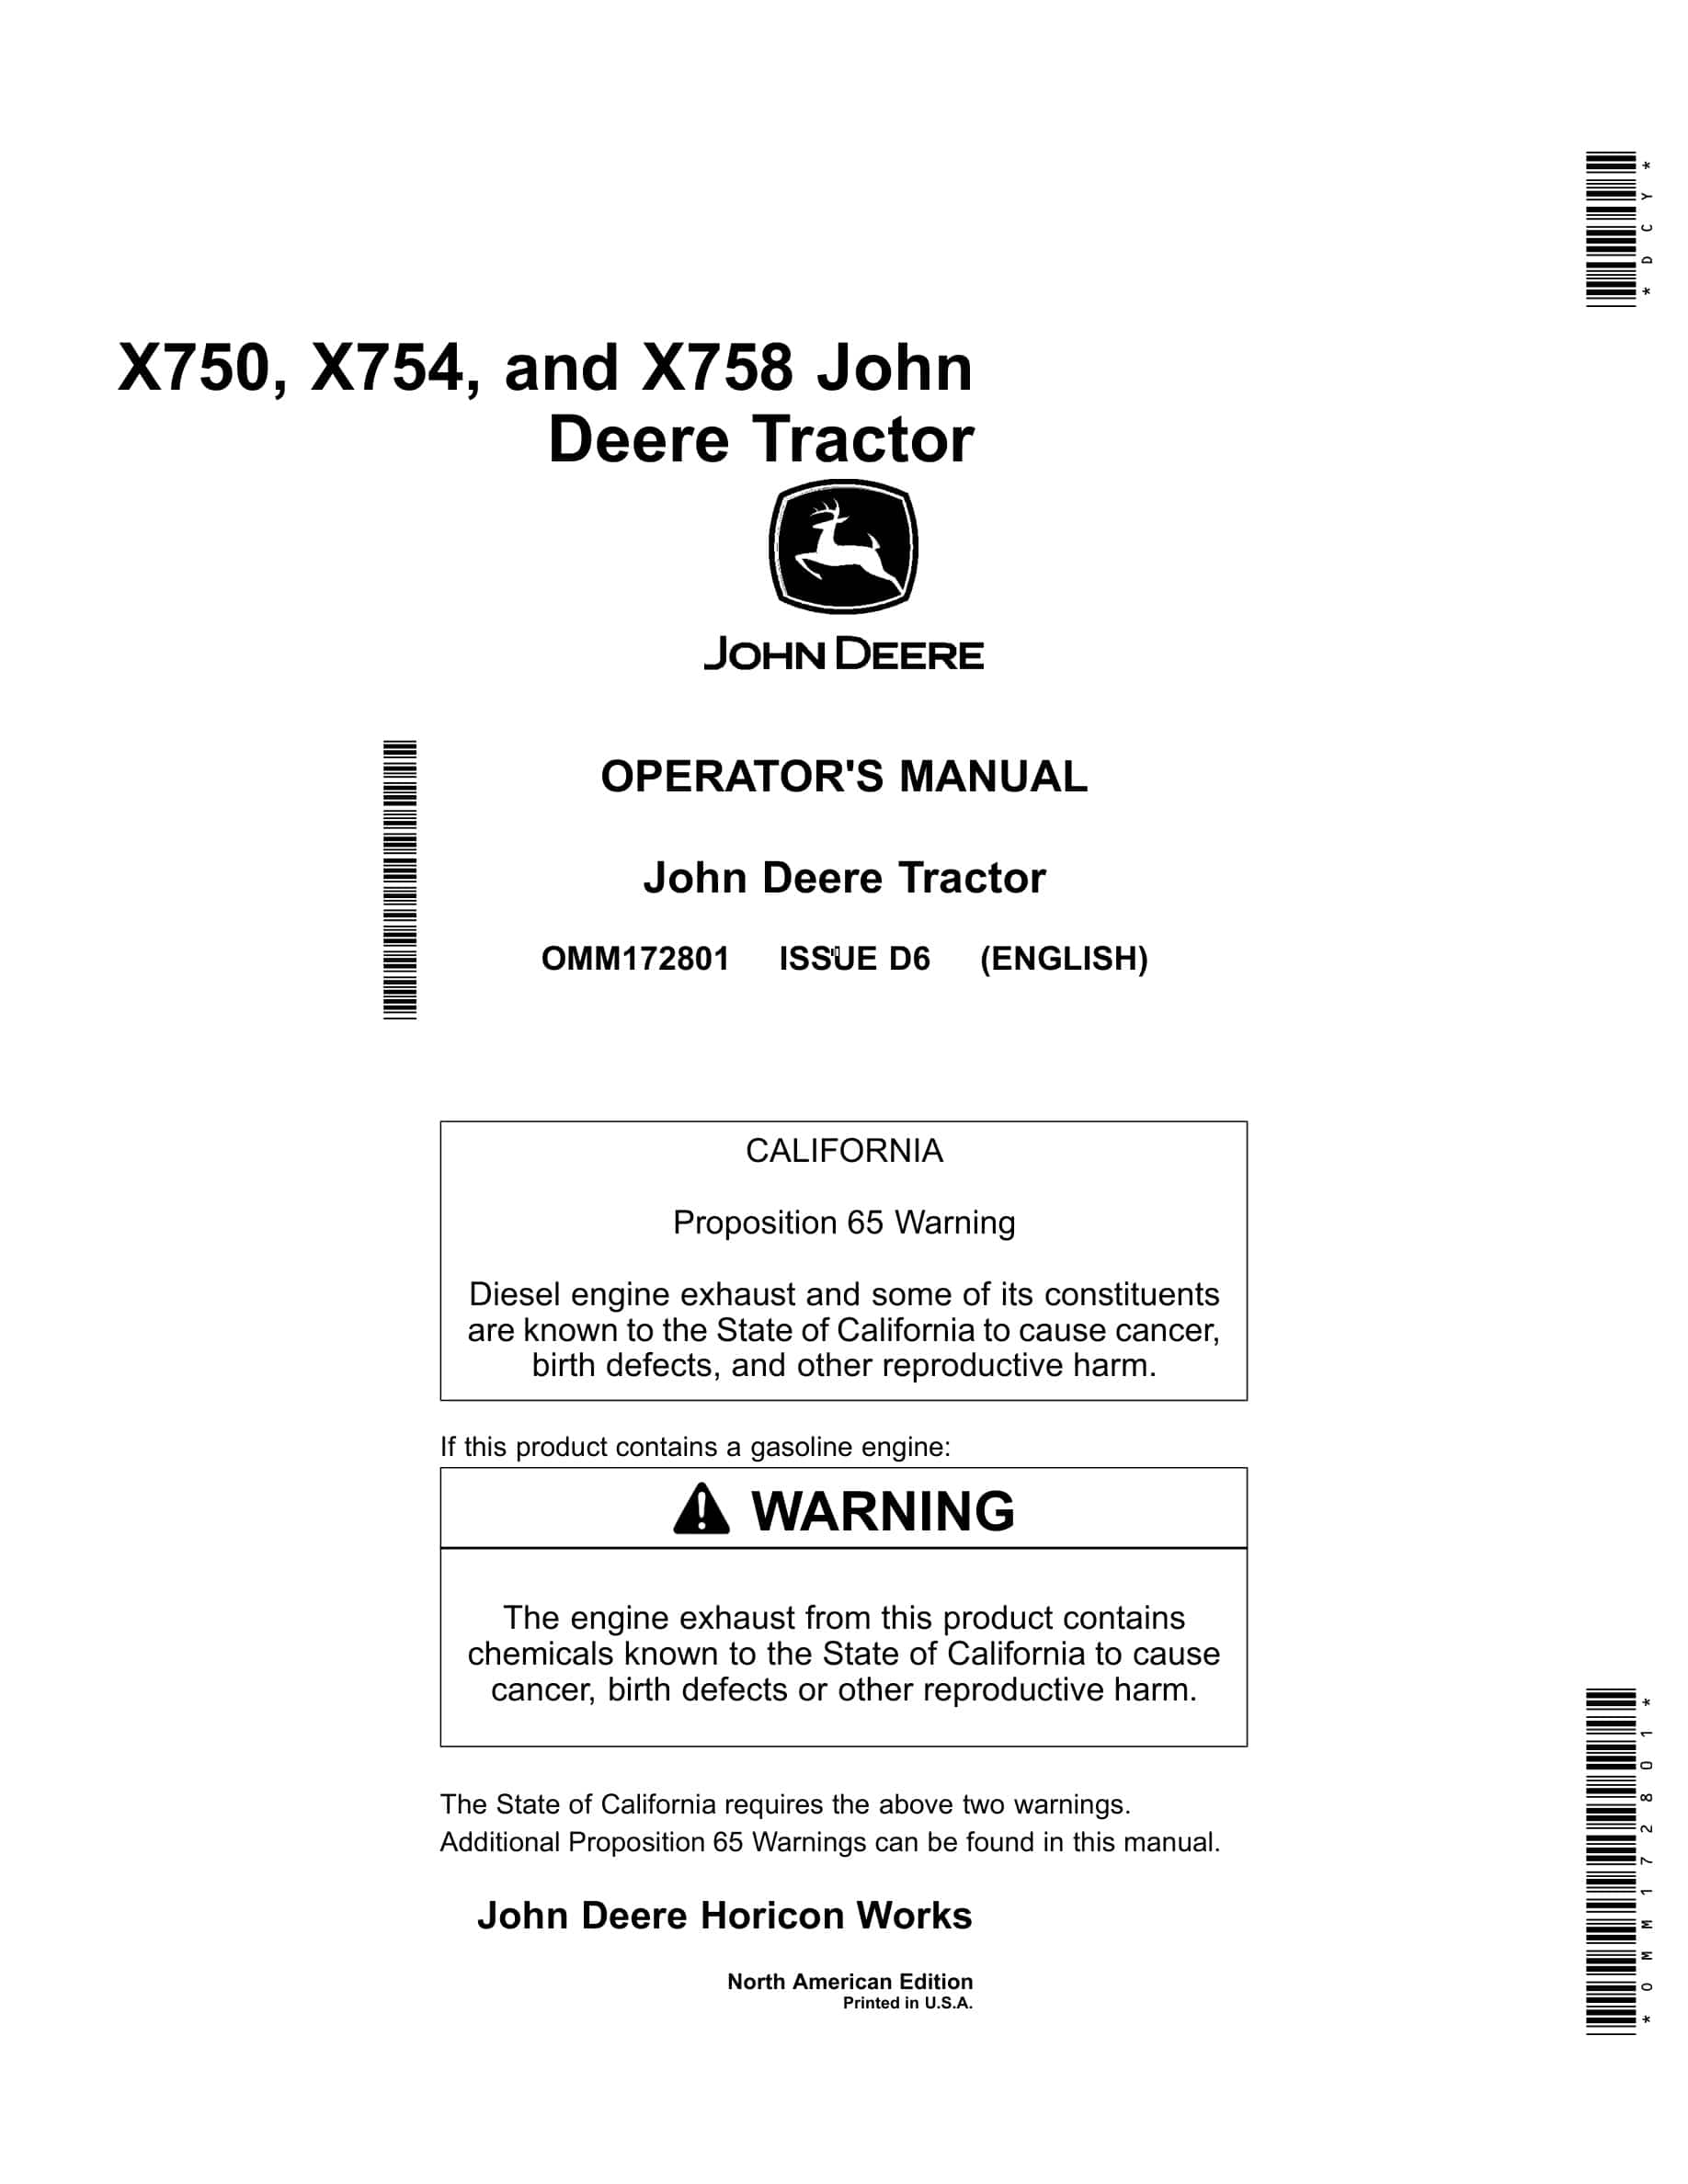 John Deere X750, X754, and X758 Tractor Operator Manual OMM172801-1